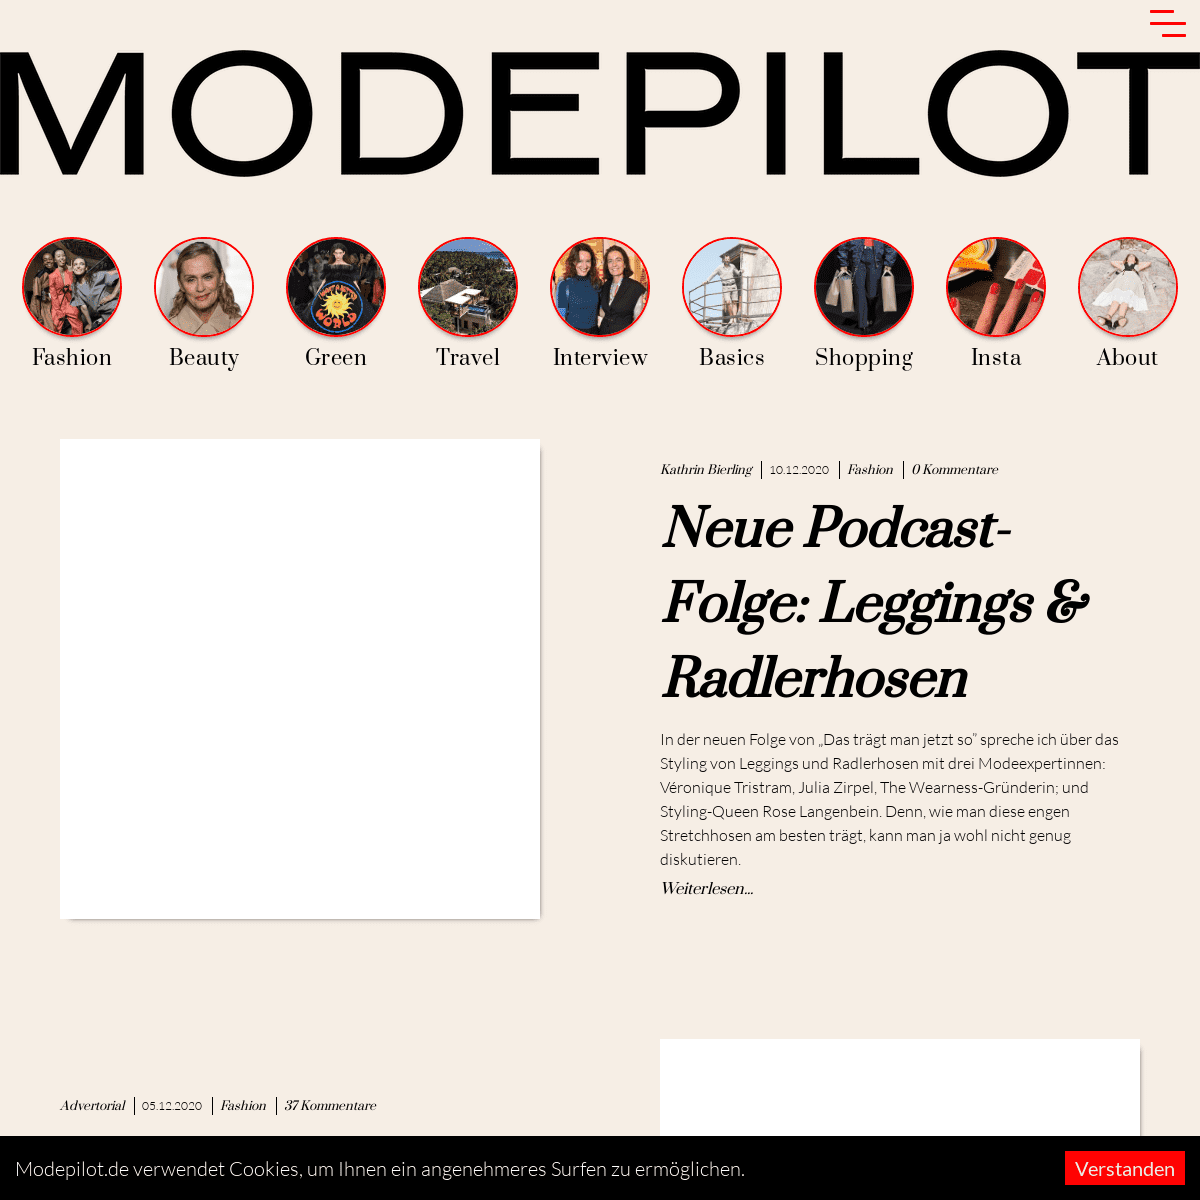 A complete backup of modepilot.de